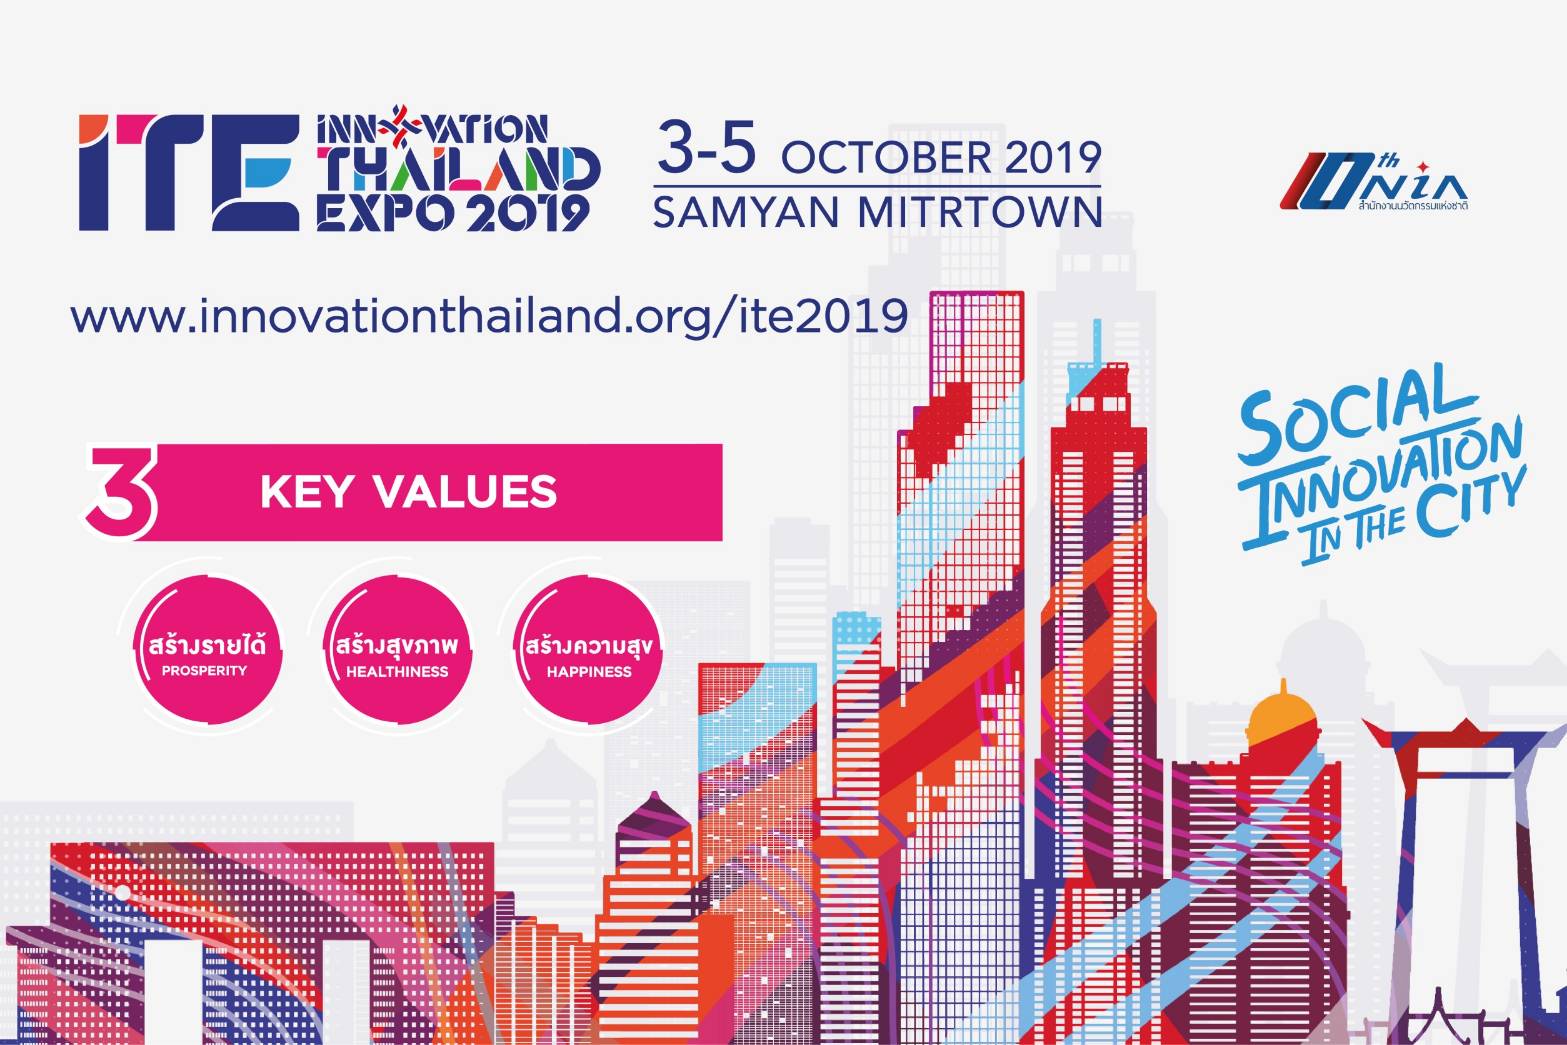 Innovation Thailand Expo 2019 (ITE 2019)